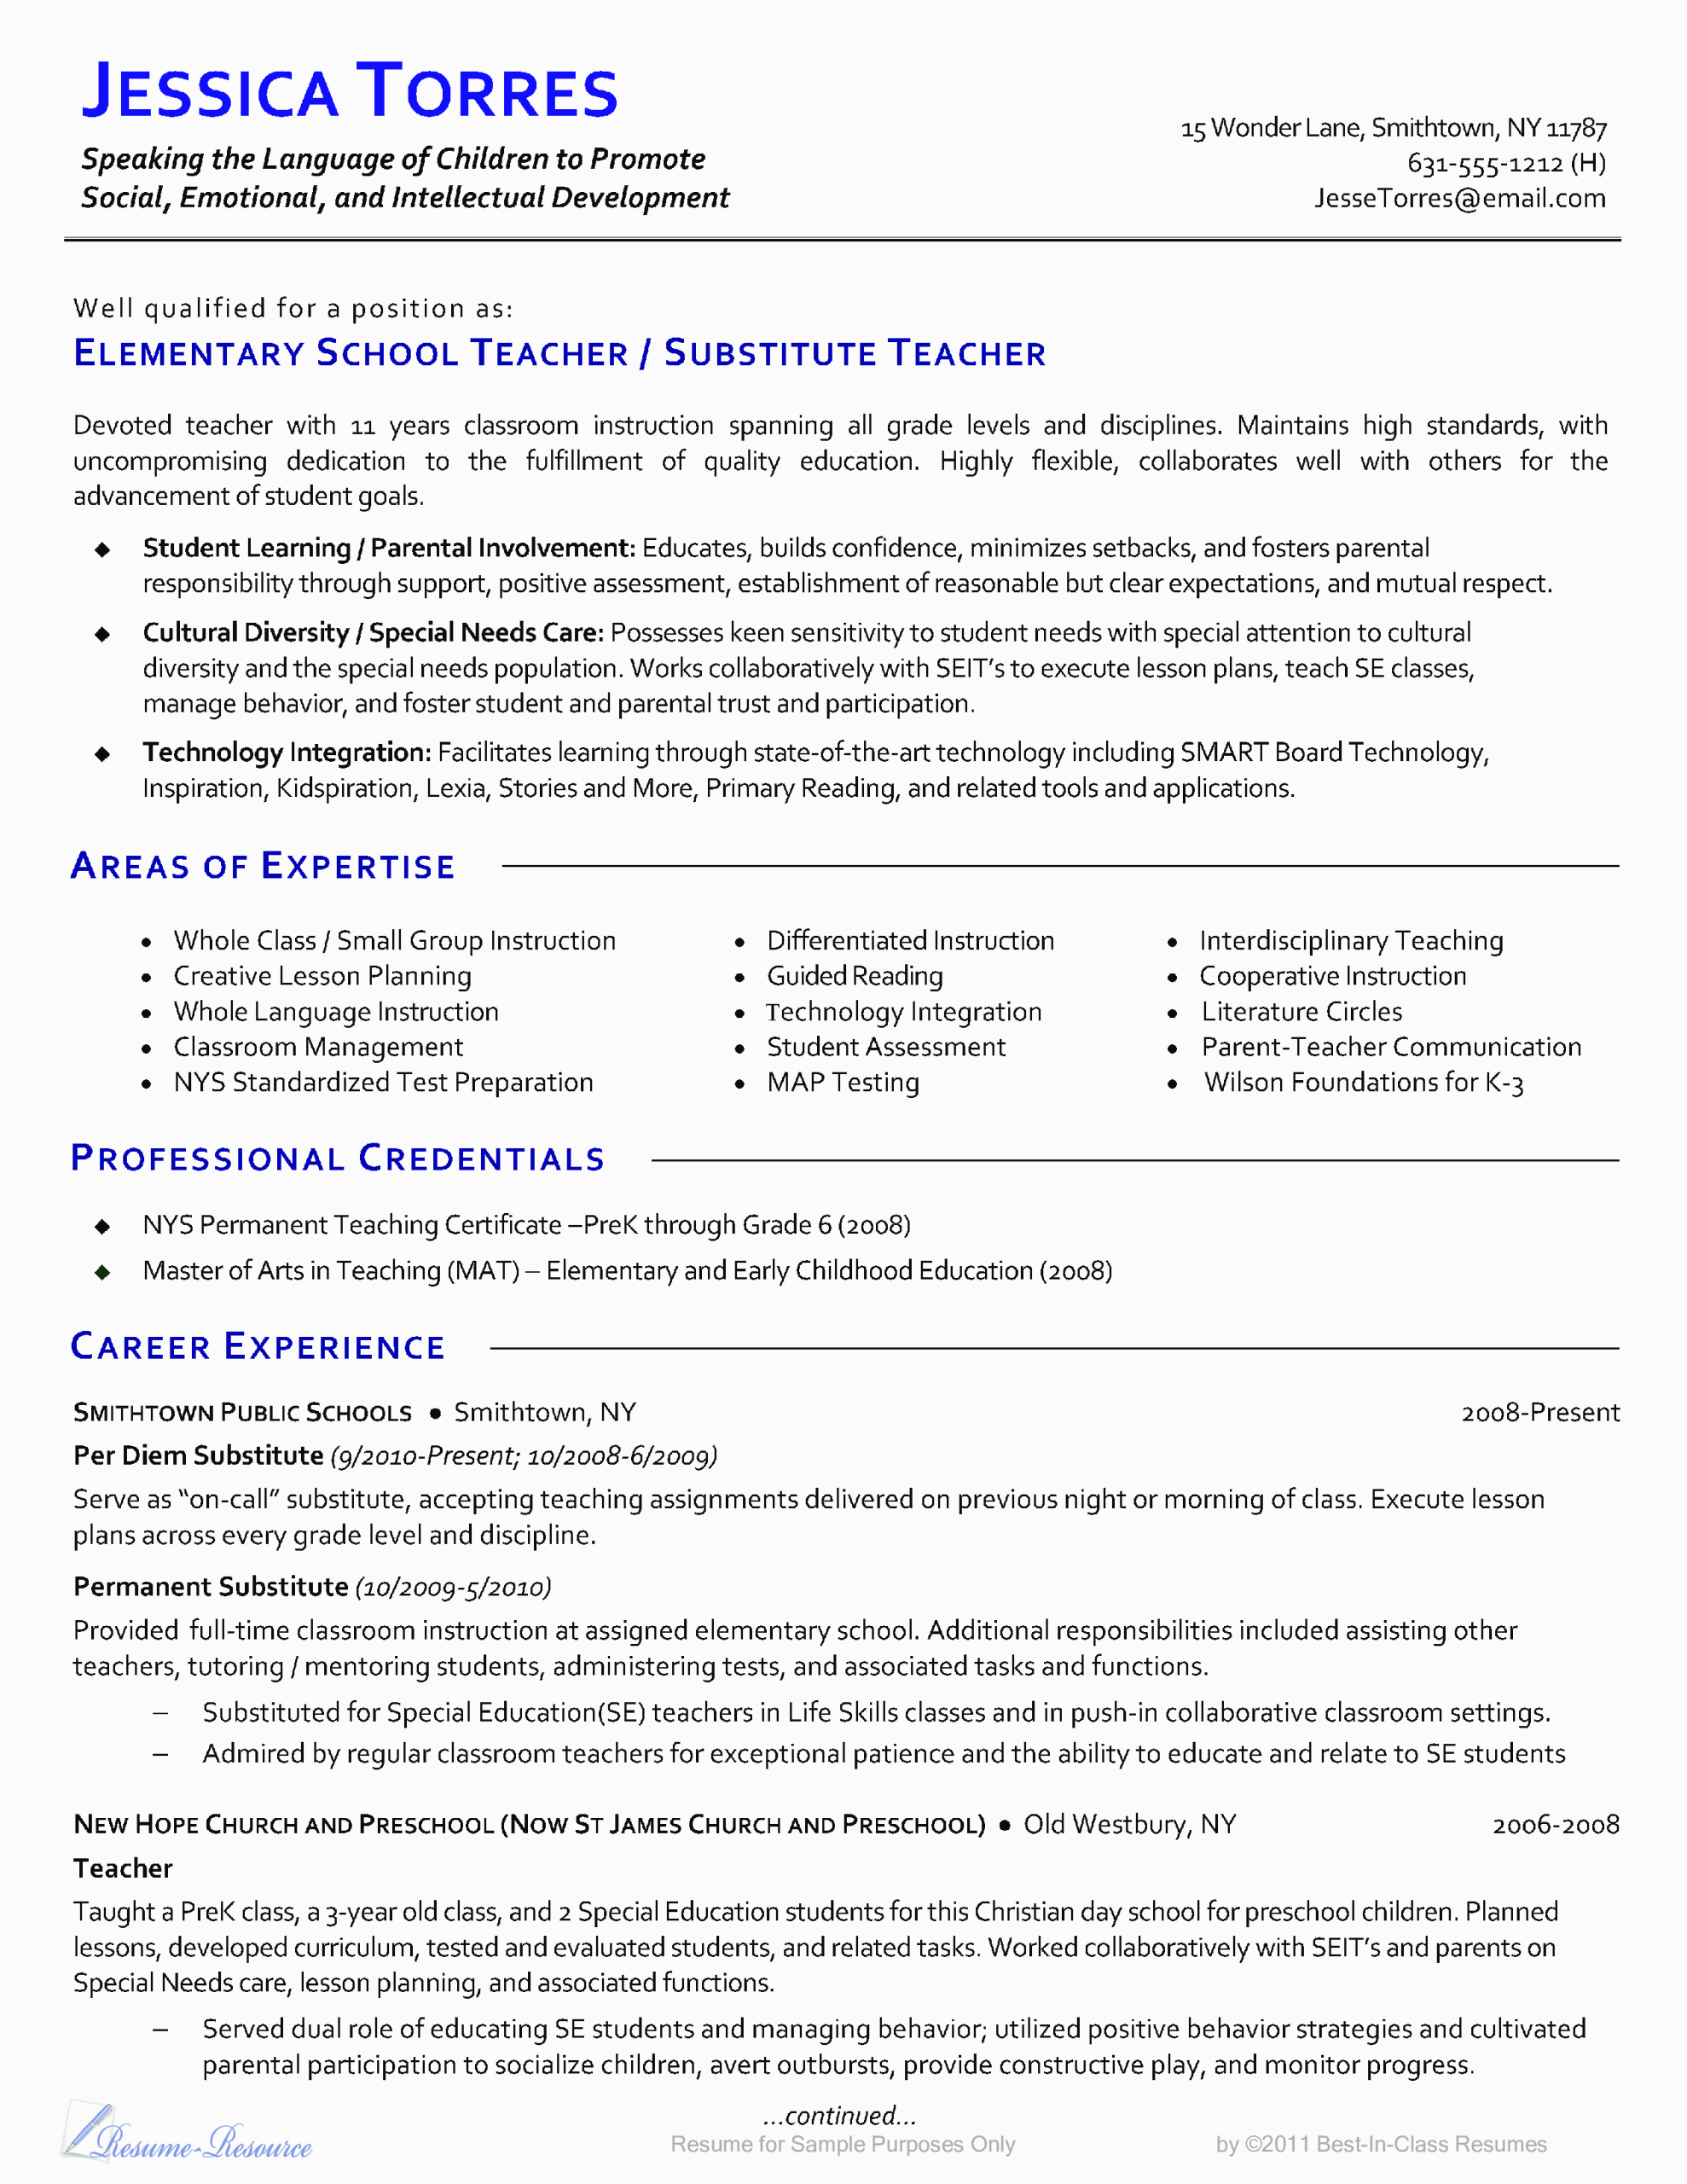 Sample Resume for Teacher with Little Experience Free Elementary School Teacher Cv Template